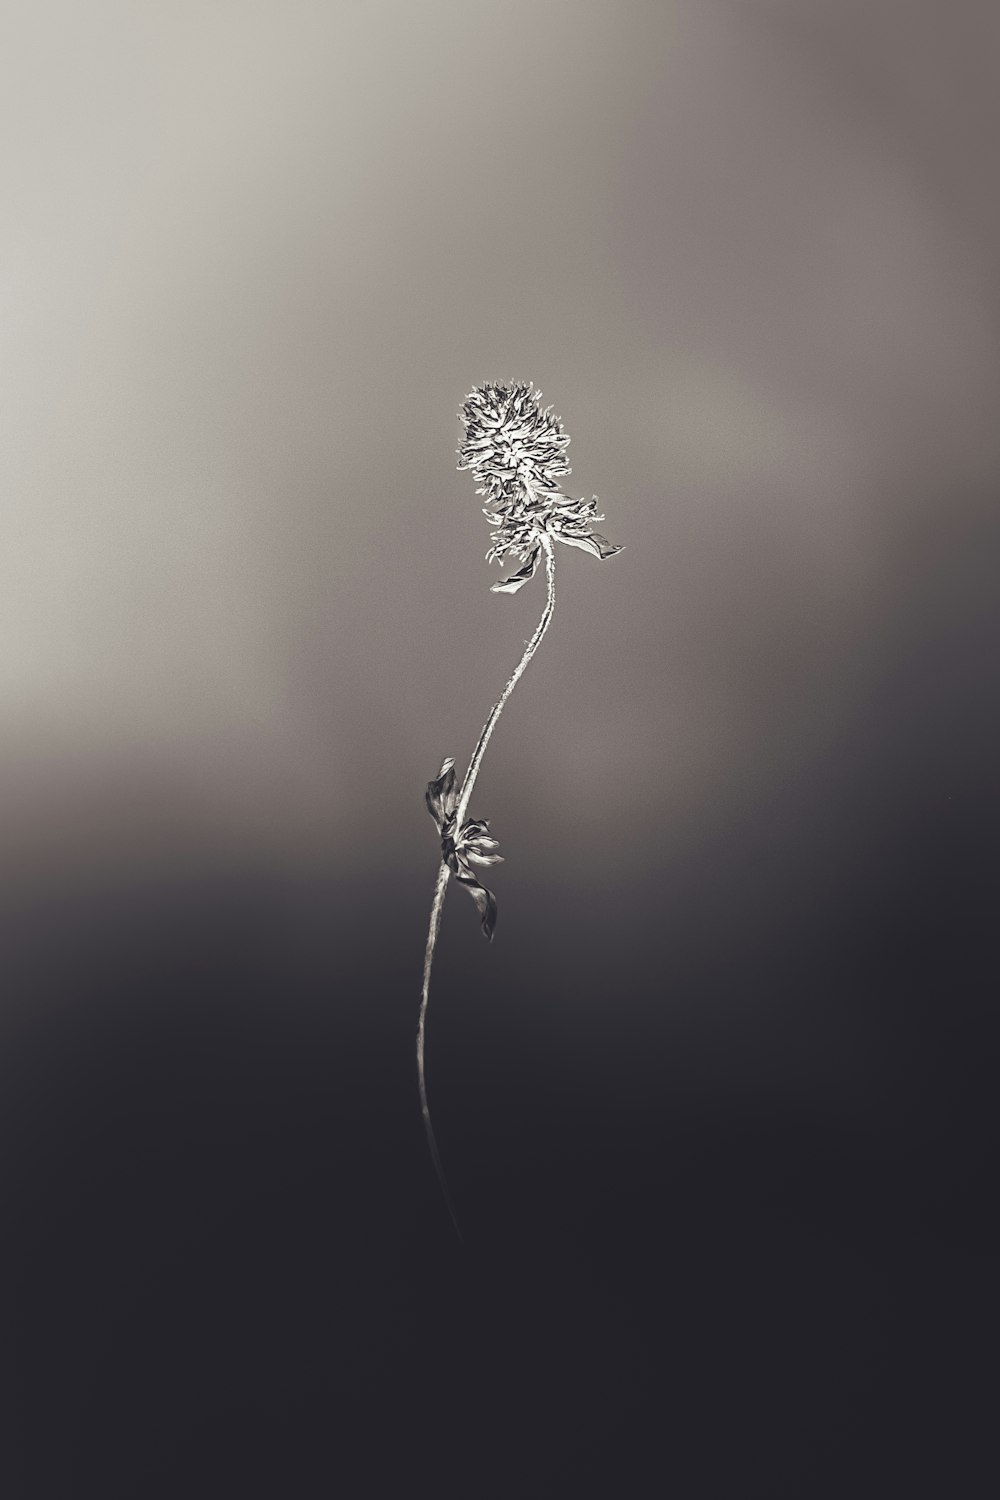 Foto in scala di grigi di un fiore in fiore